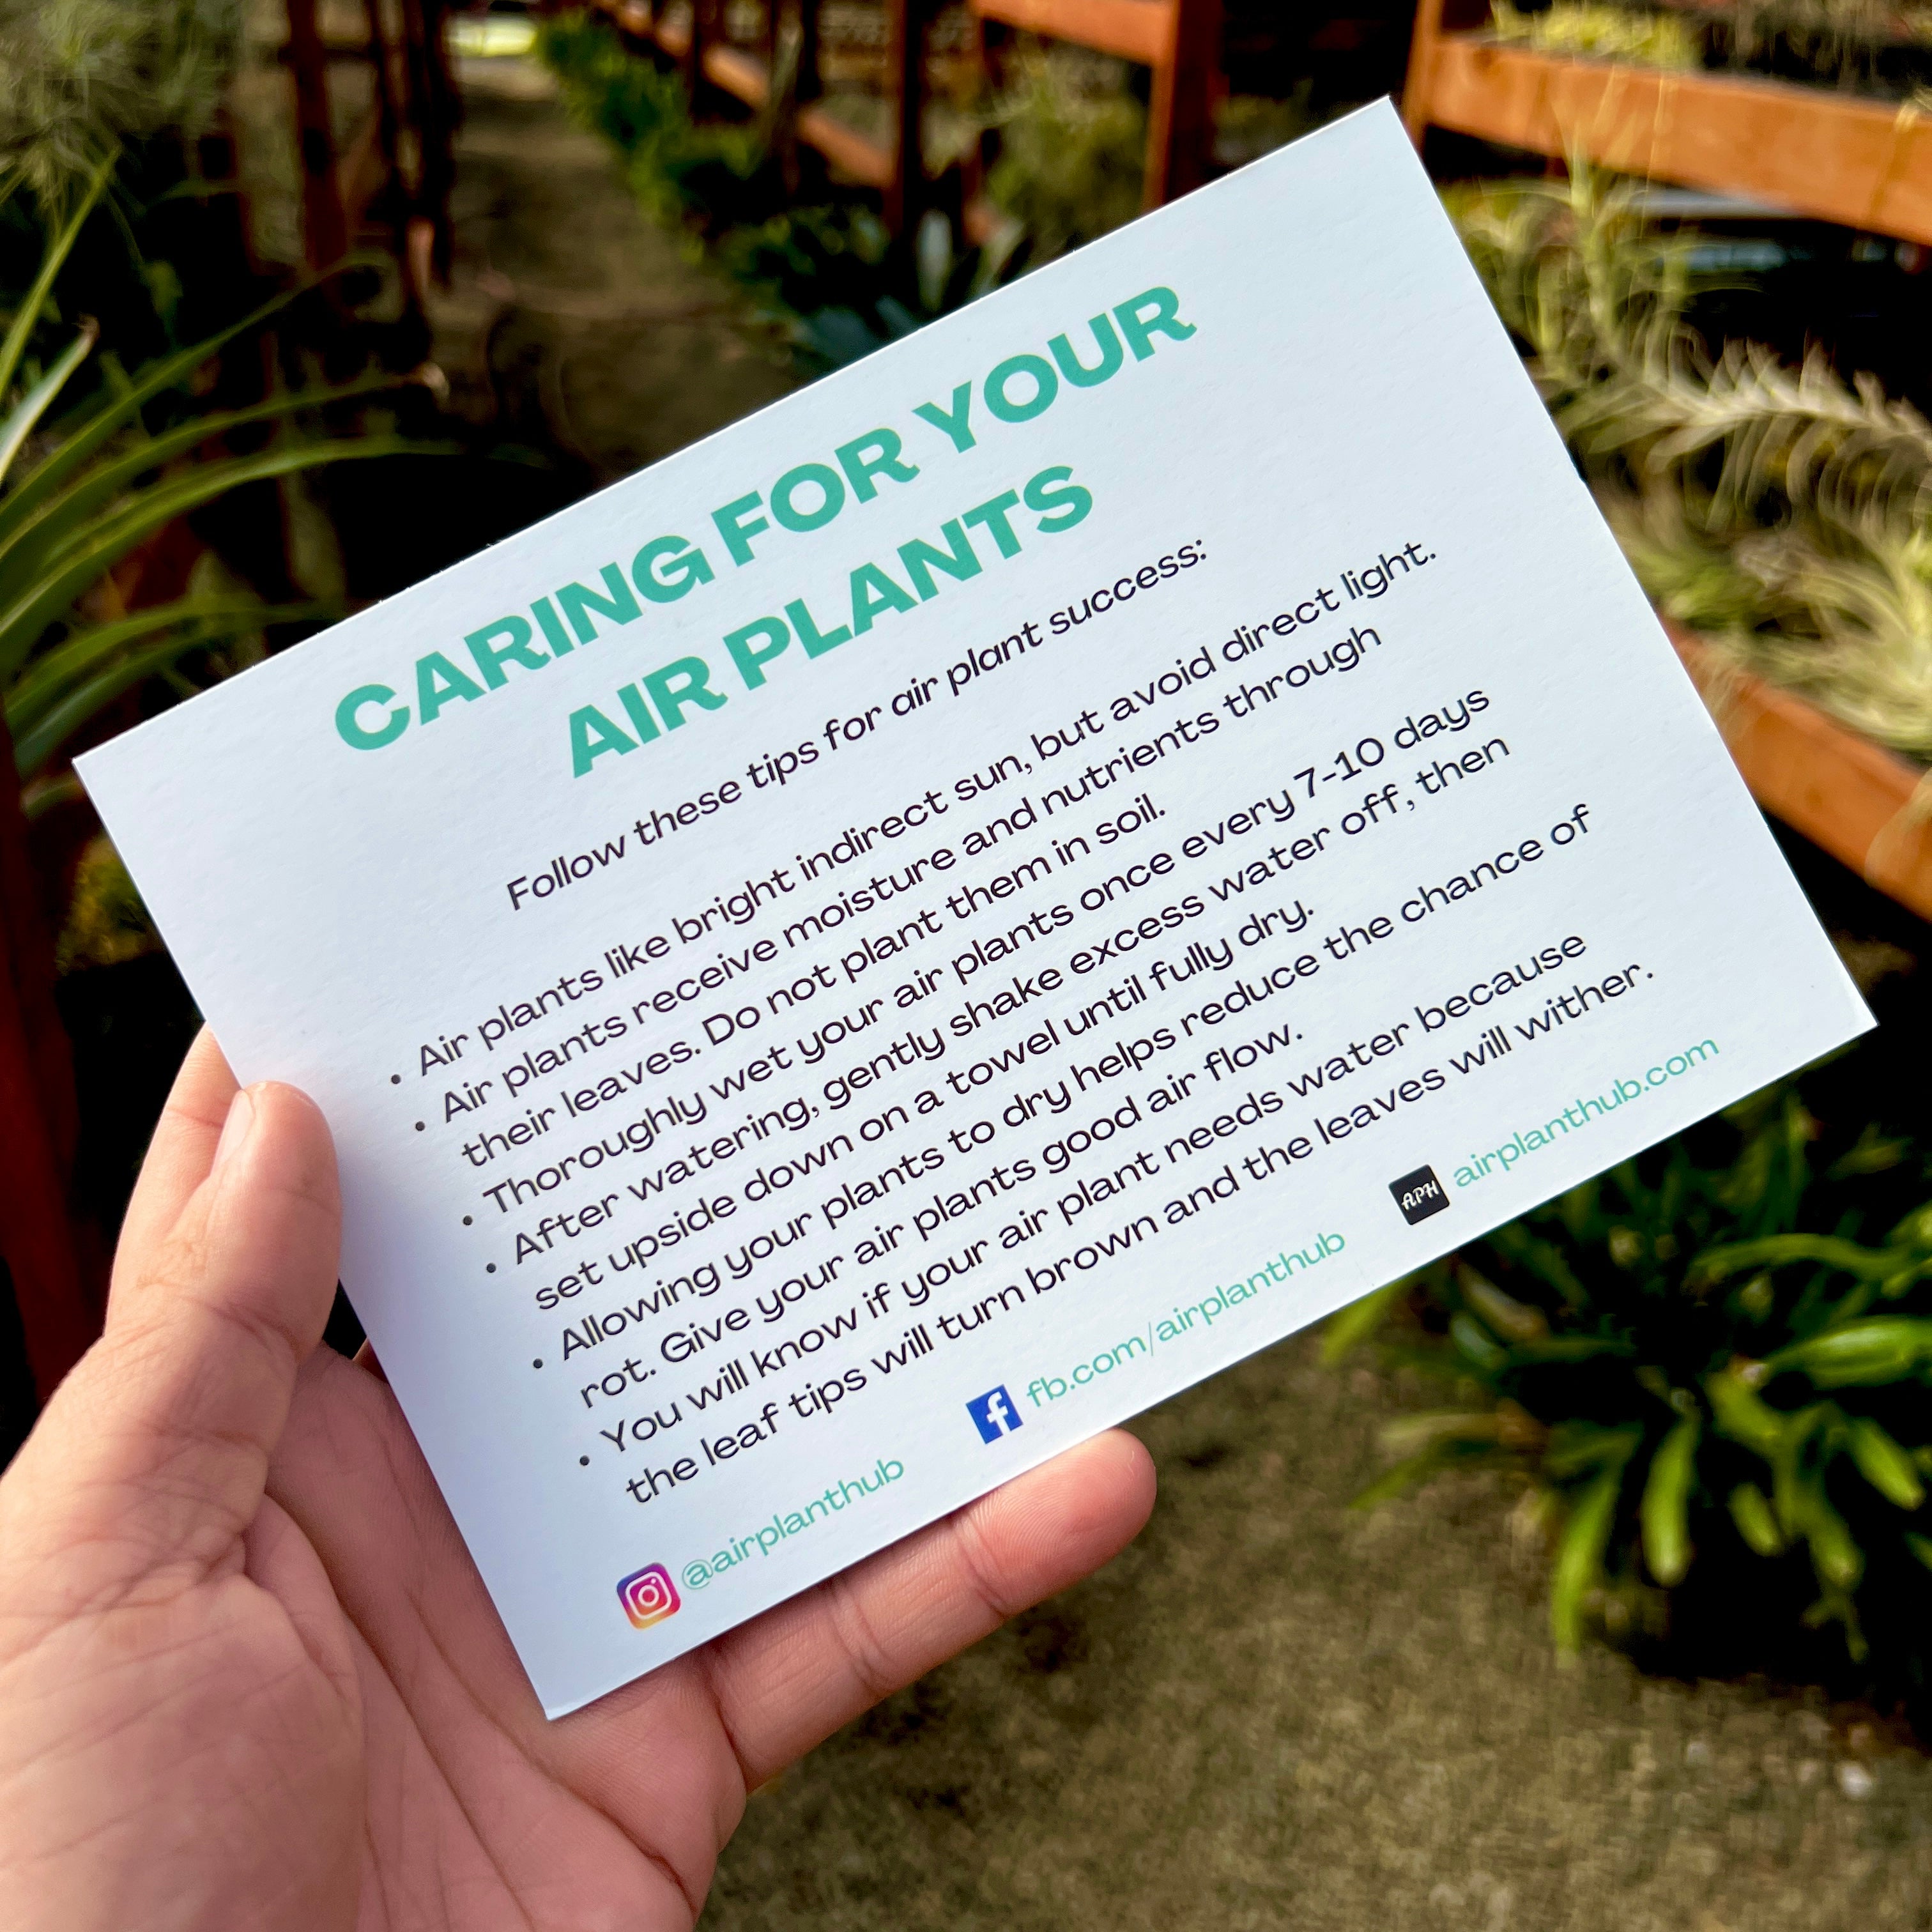 Air Plant Care Card Tillandsia Instructions